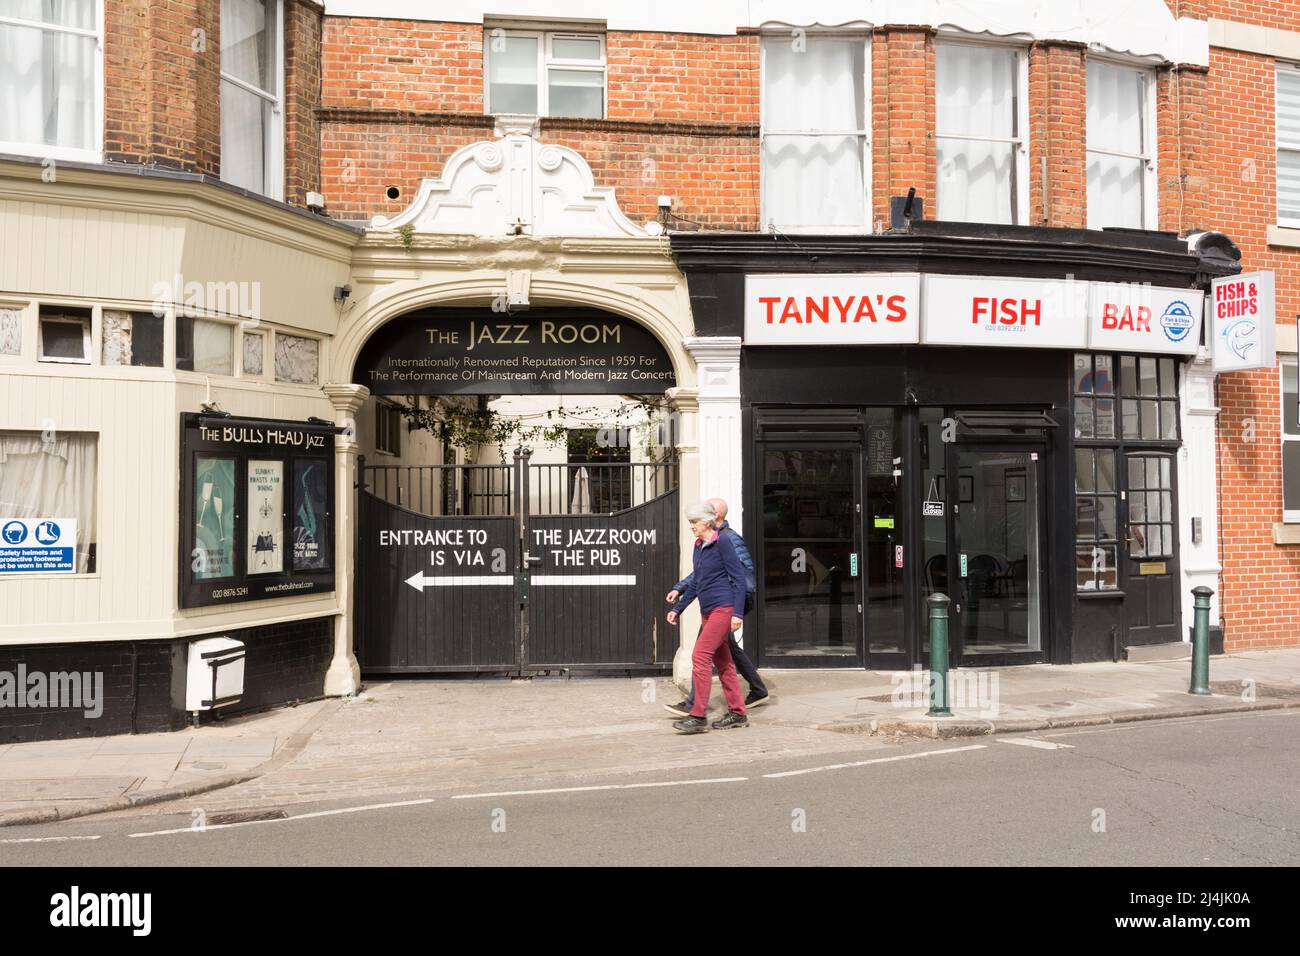 La entrada a la sala de jazz en el pub Bull's Head y Tanya's Fish Bar, High Street, Barnes, Londres, SW13, Inglaterra, Reino Unido Foto de stock